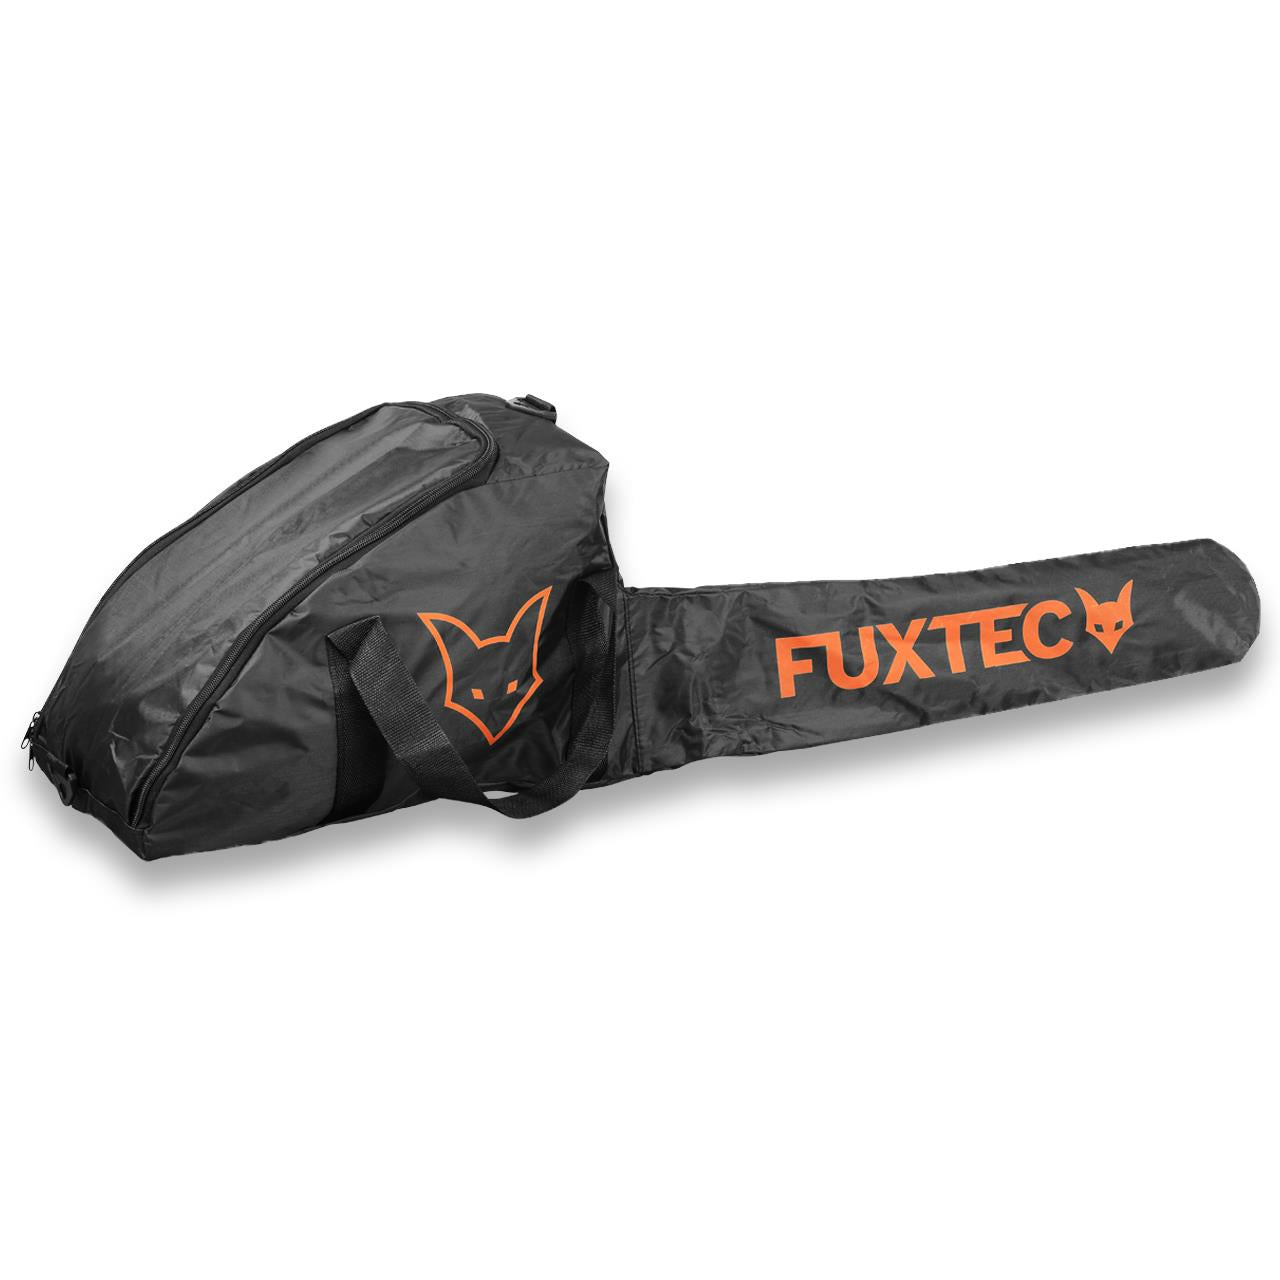 Petrol FUXTEC chainsaw – The FX-KS255 Black Edition